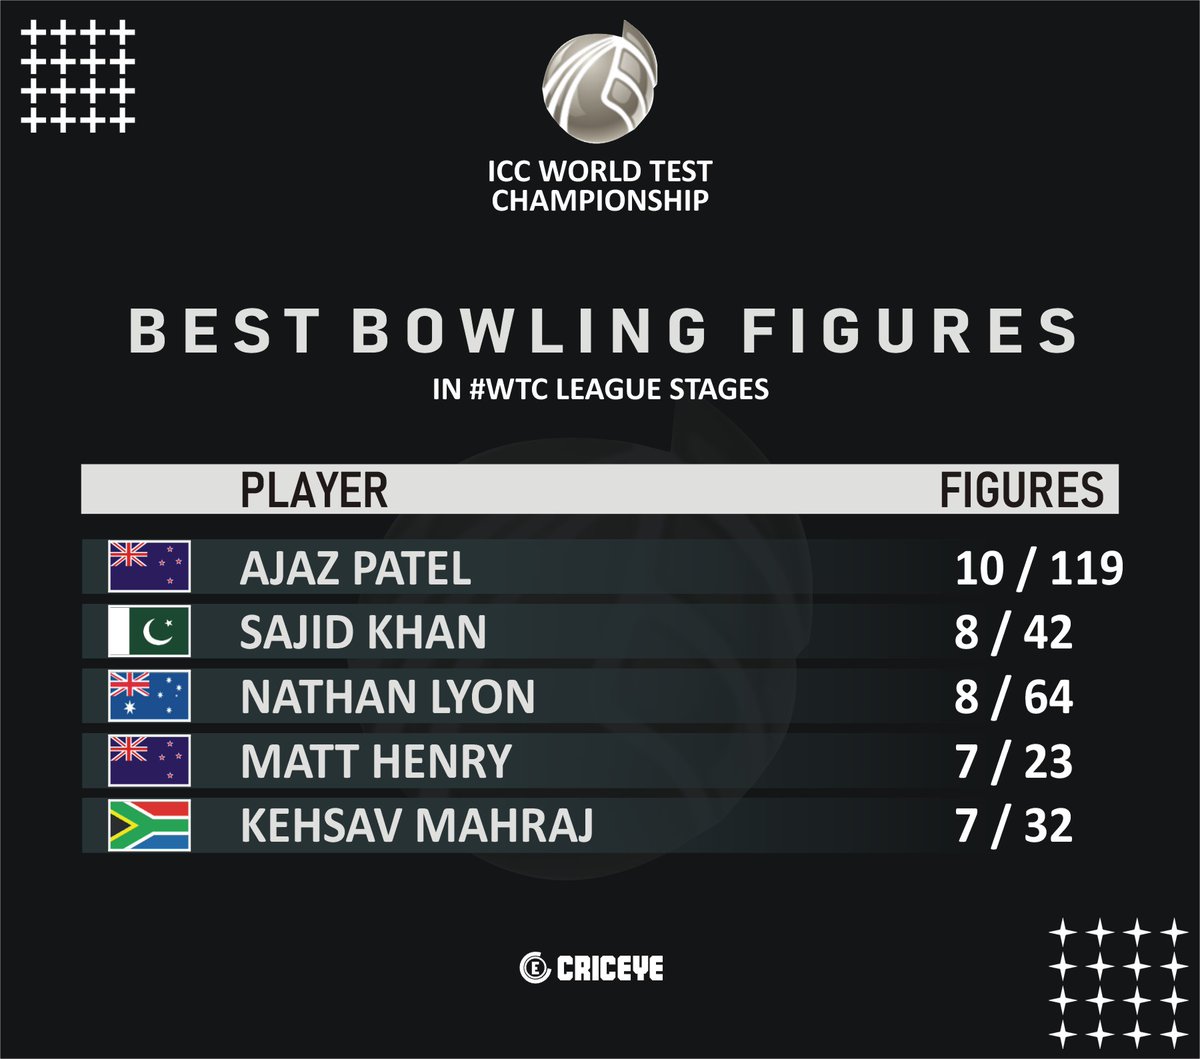 Outstanding bowling performances in the #WTC23 
#SajidKhan #ajazpatel #nathanlyon #matthenry #kehshavmahraj